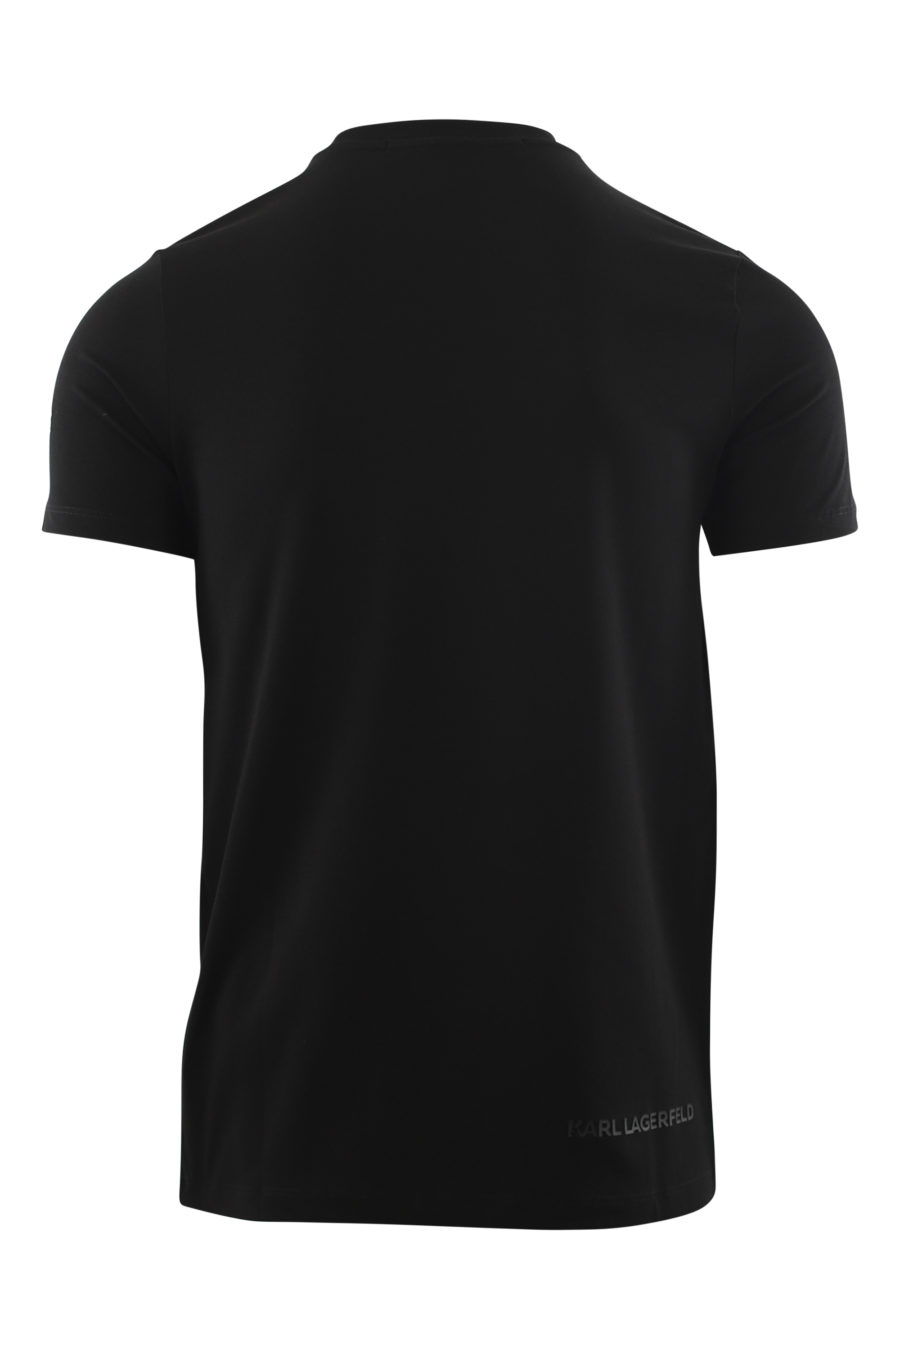 Camiseta negra con logo plateado en relieve - IMG 6561